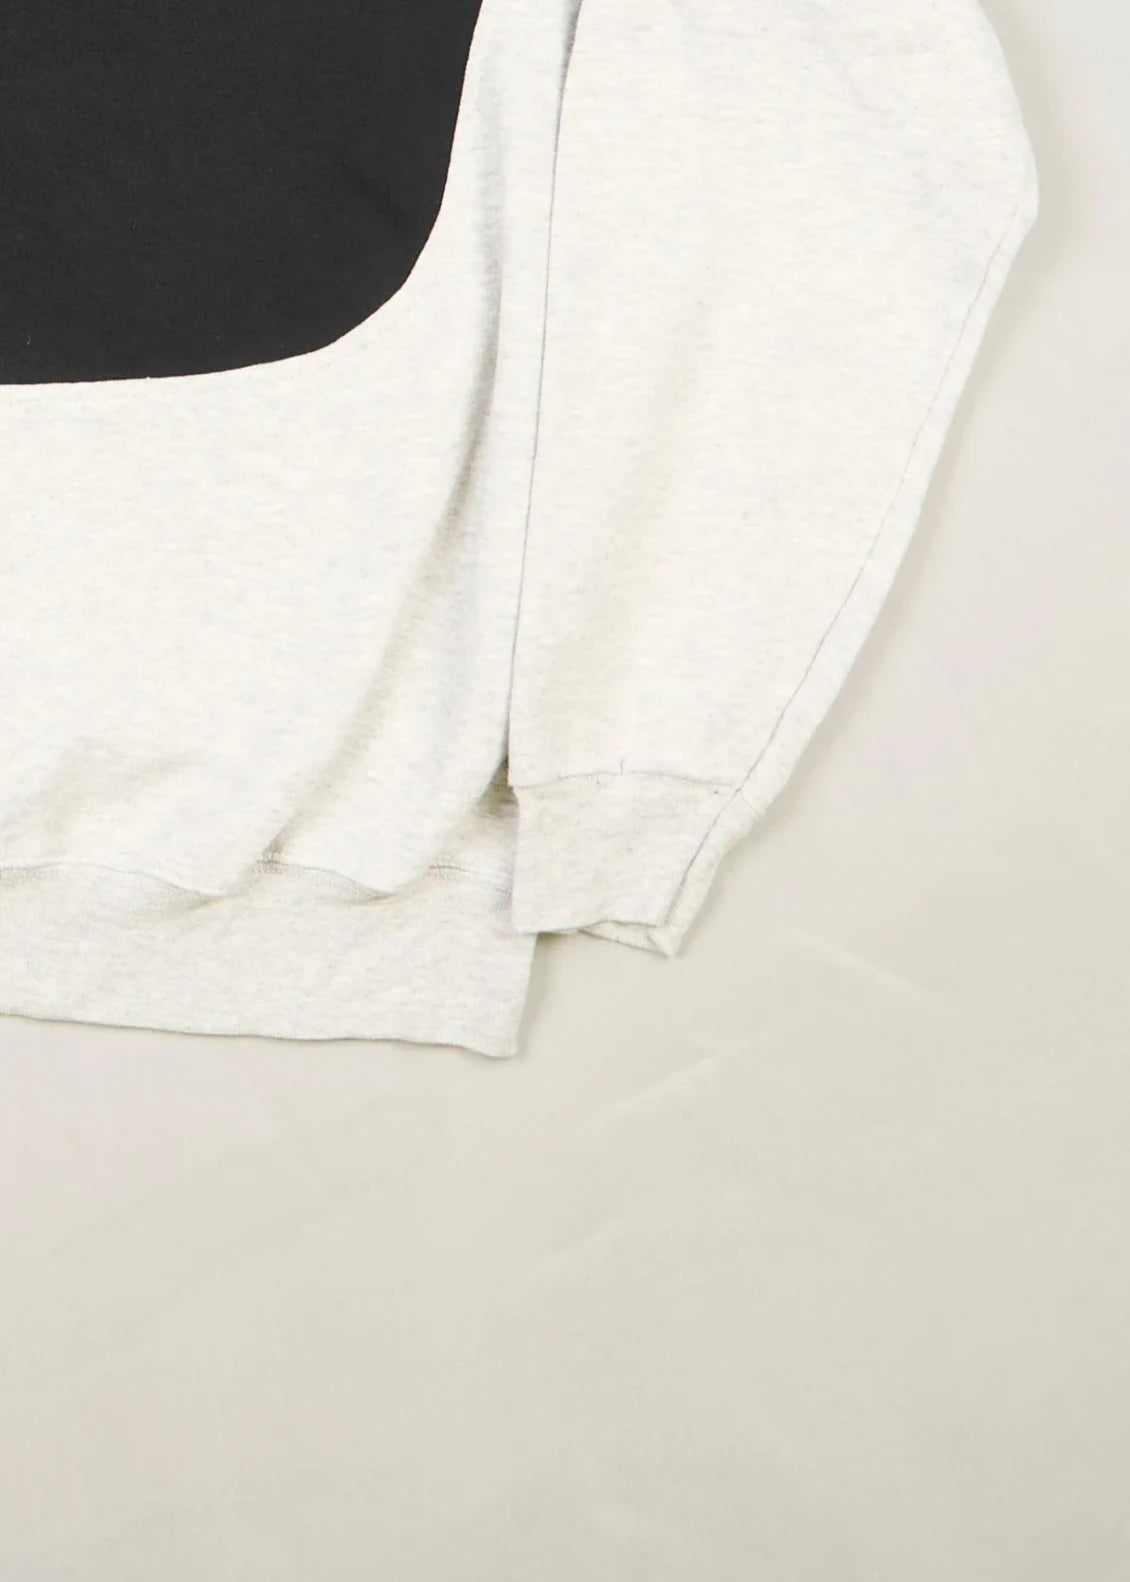 Adidas - Sweatshirt (S) Bottom Right